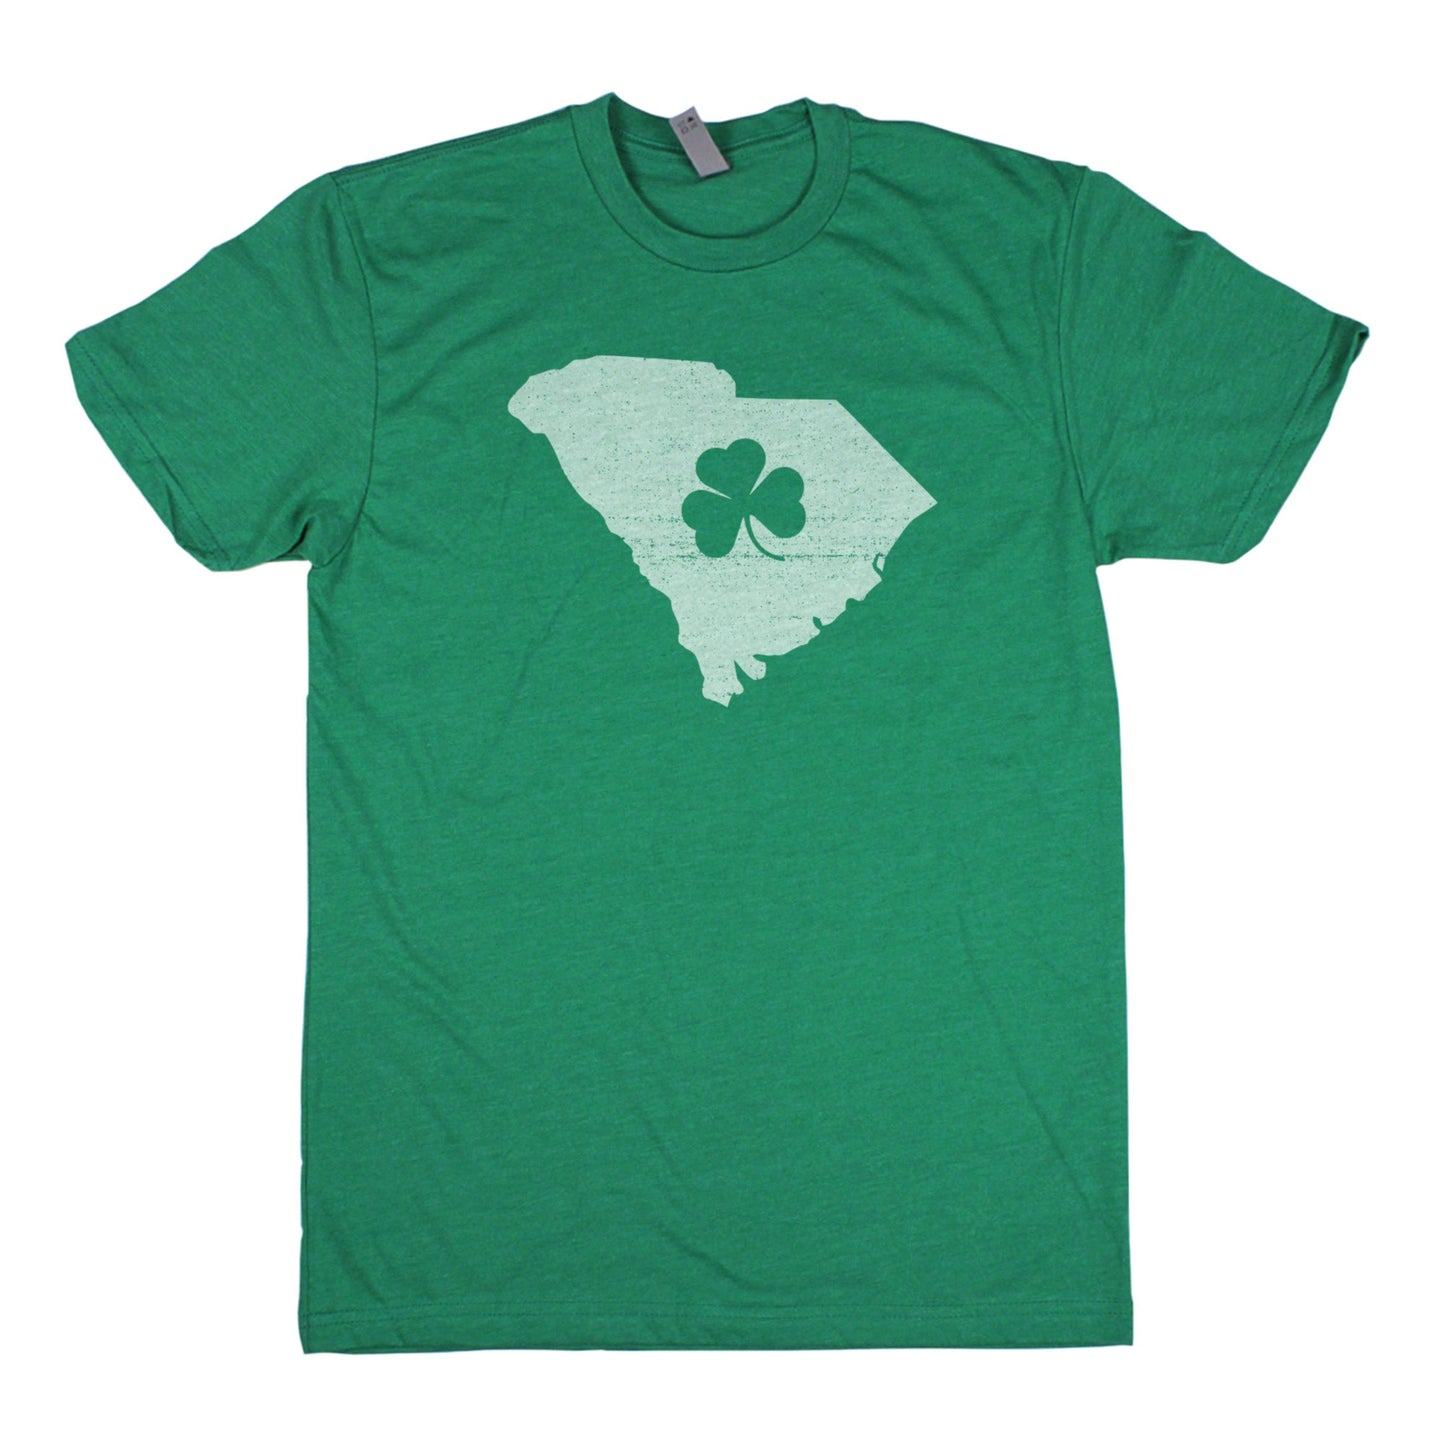 Shamrock Men's Unisex T-Shirt - South Carolina